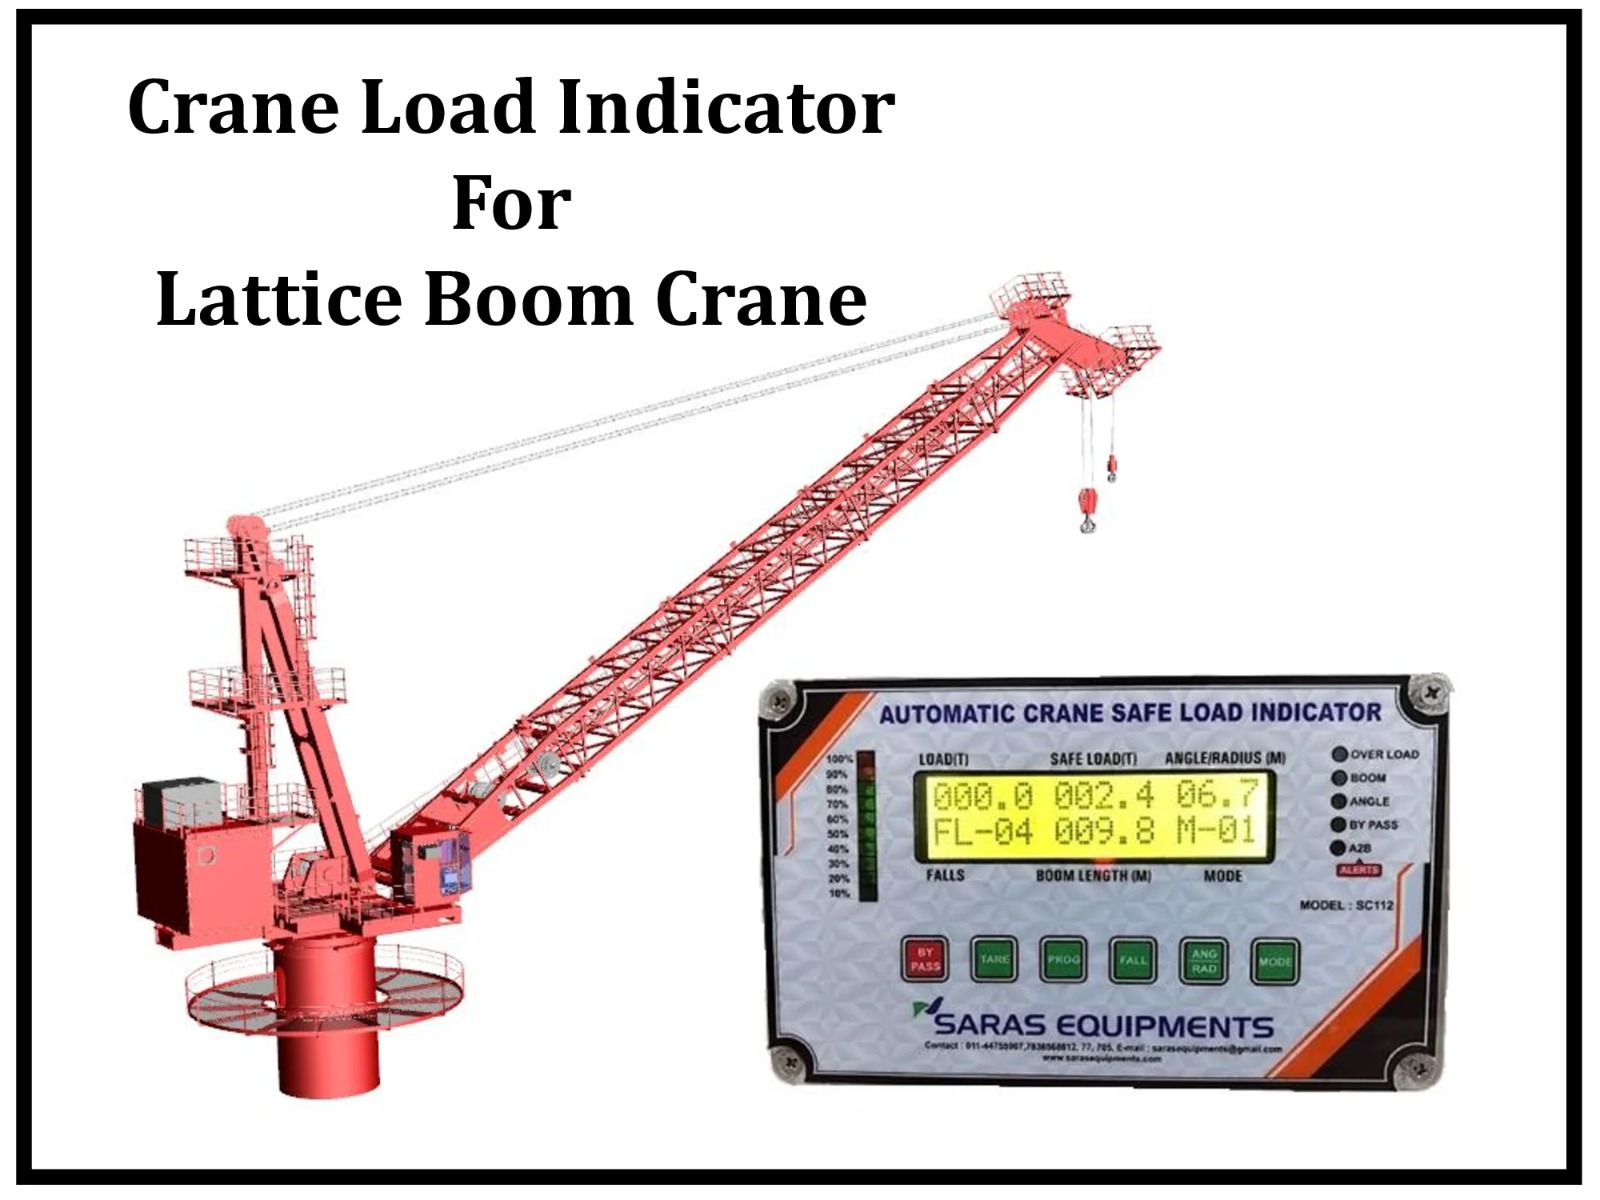 Crane Safe Load Indicator for Lattice Boom Crane